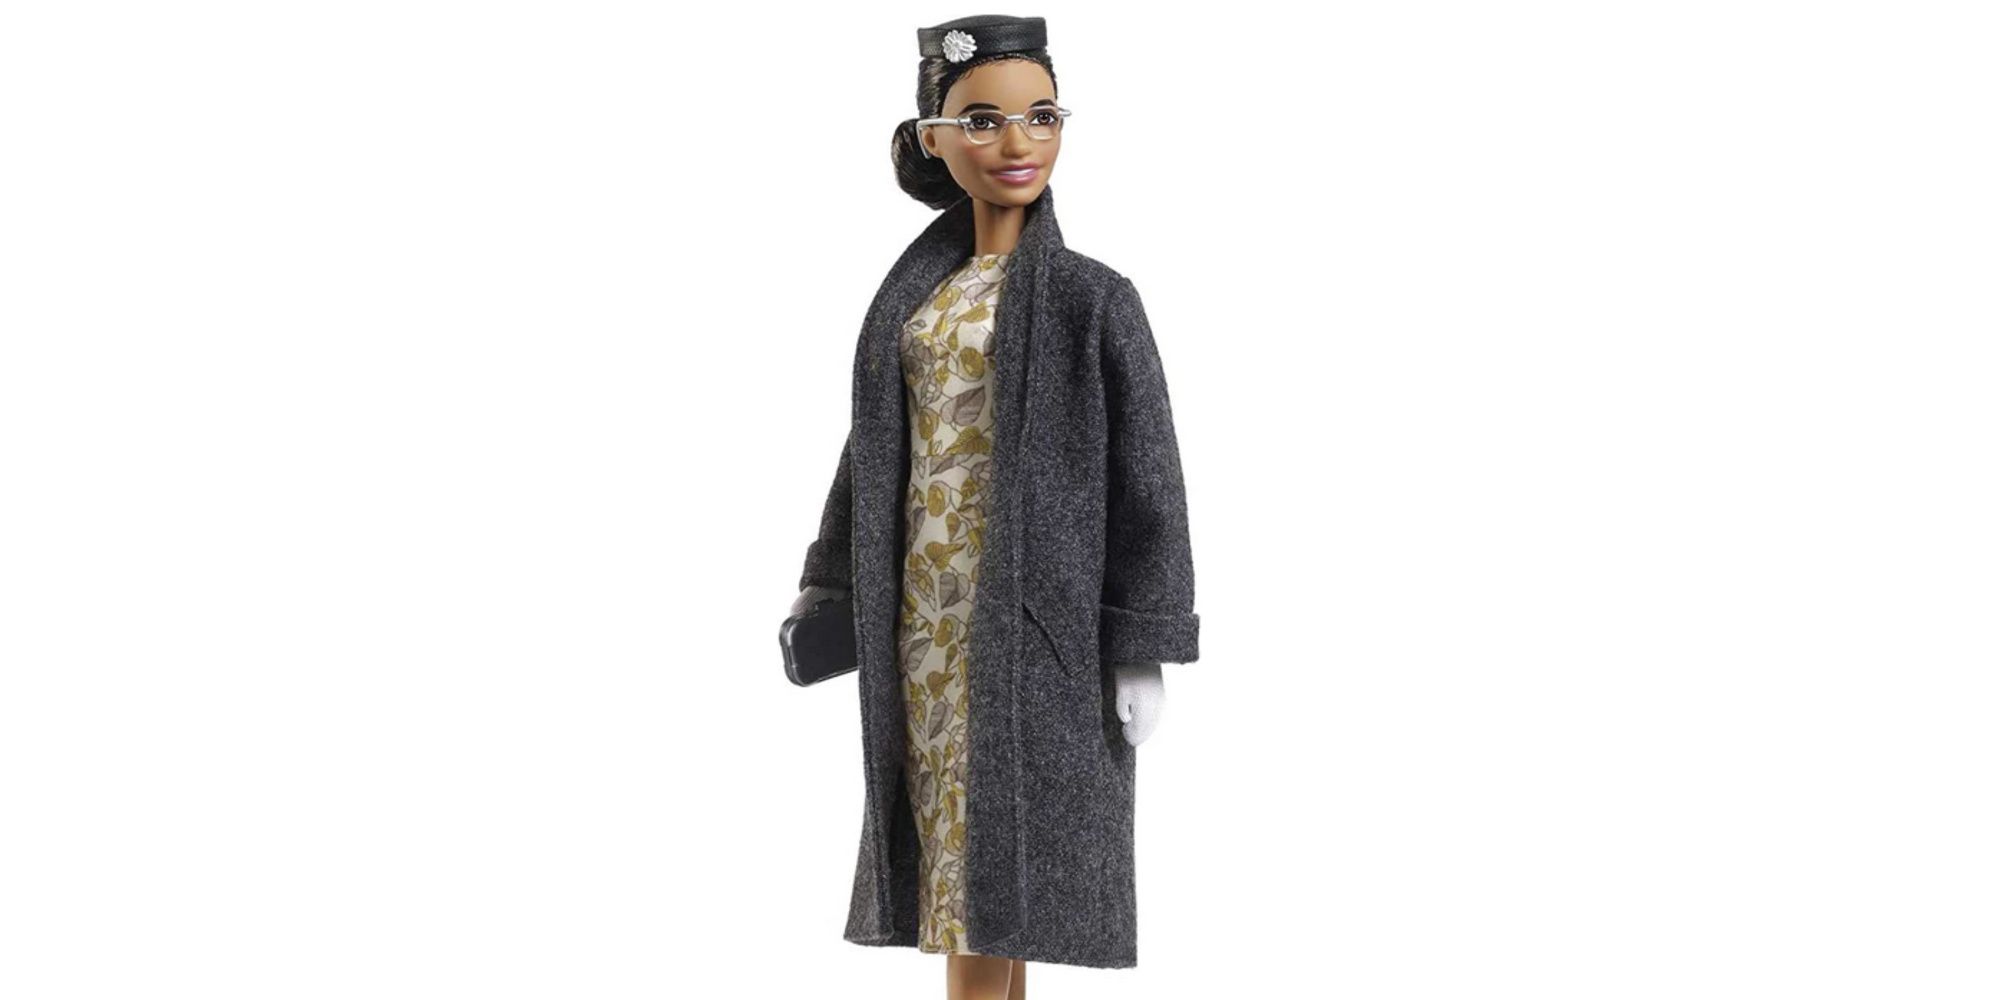 Barbie Inspirational Women Series Rosa Parks Doll